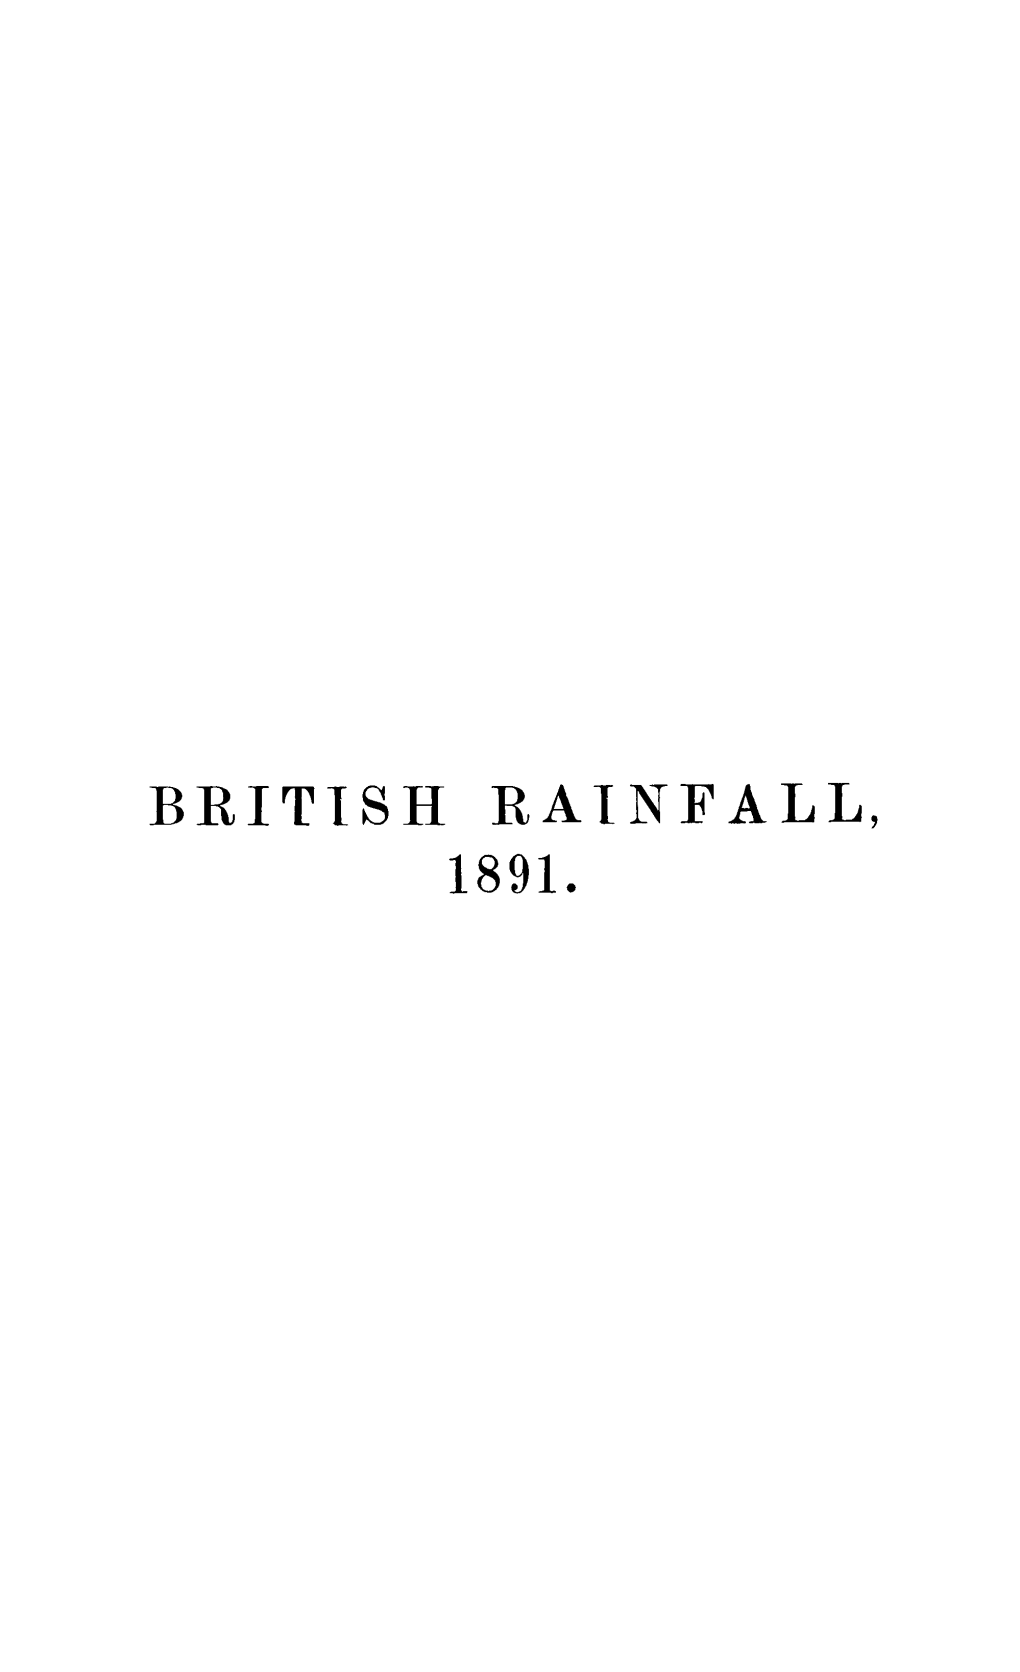 British Rainfall, 1891. London